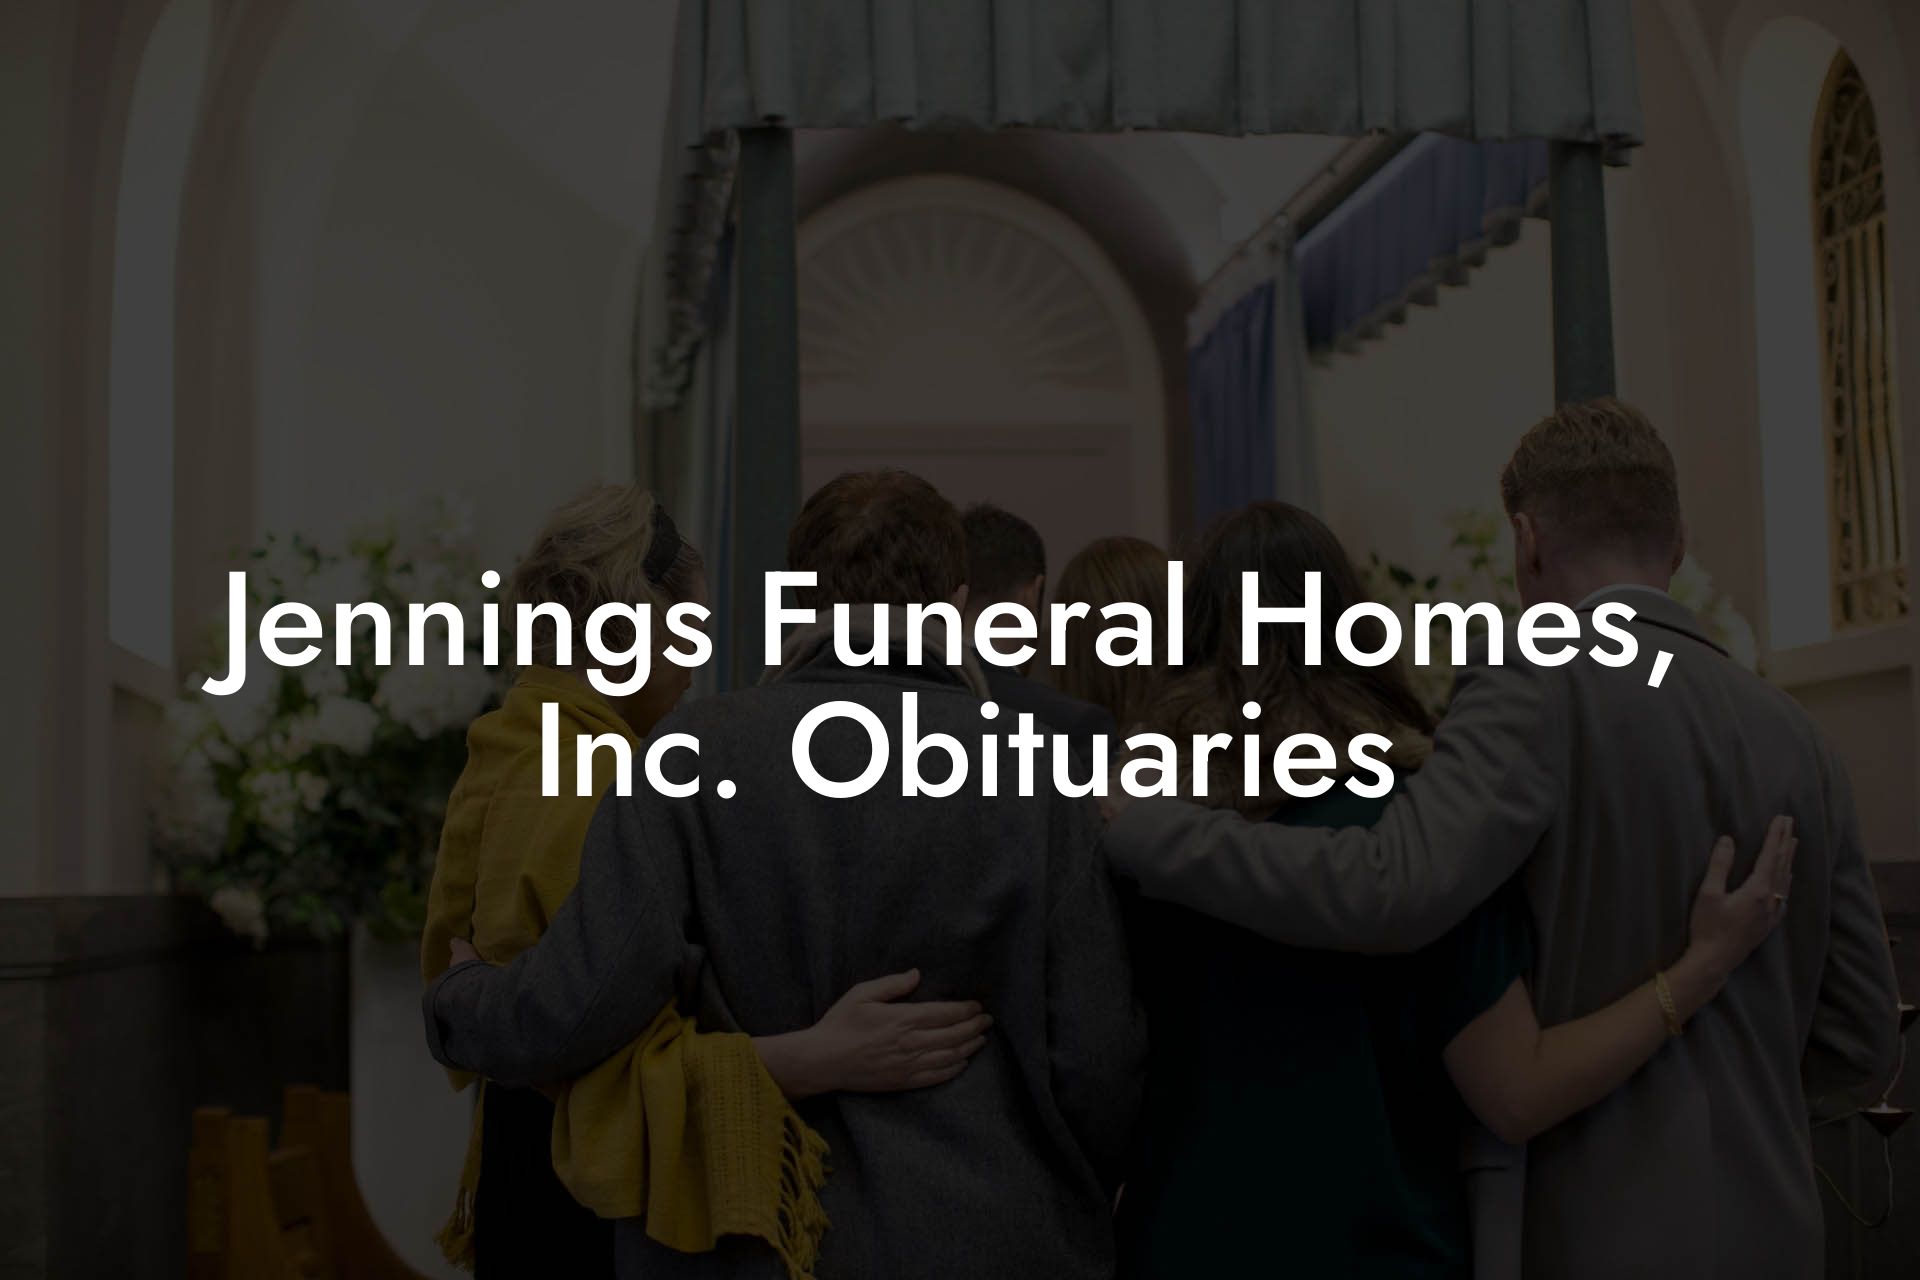 Jennings Funeral Homes, Inc. Obituaries